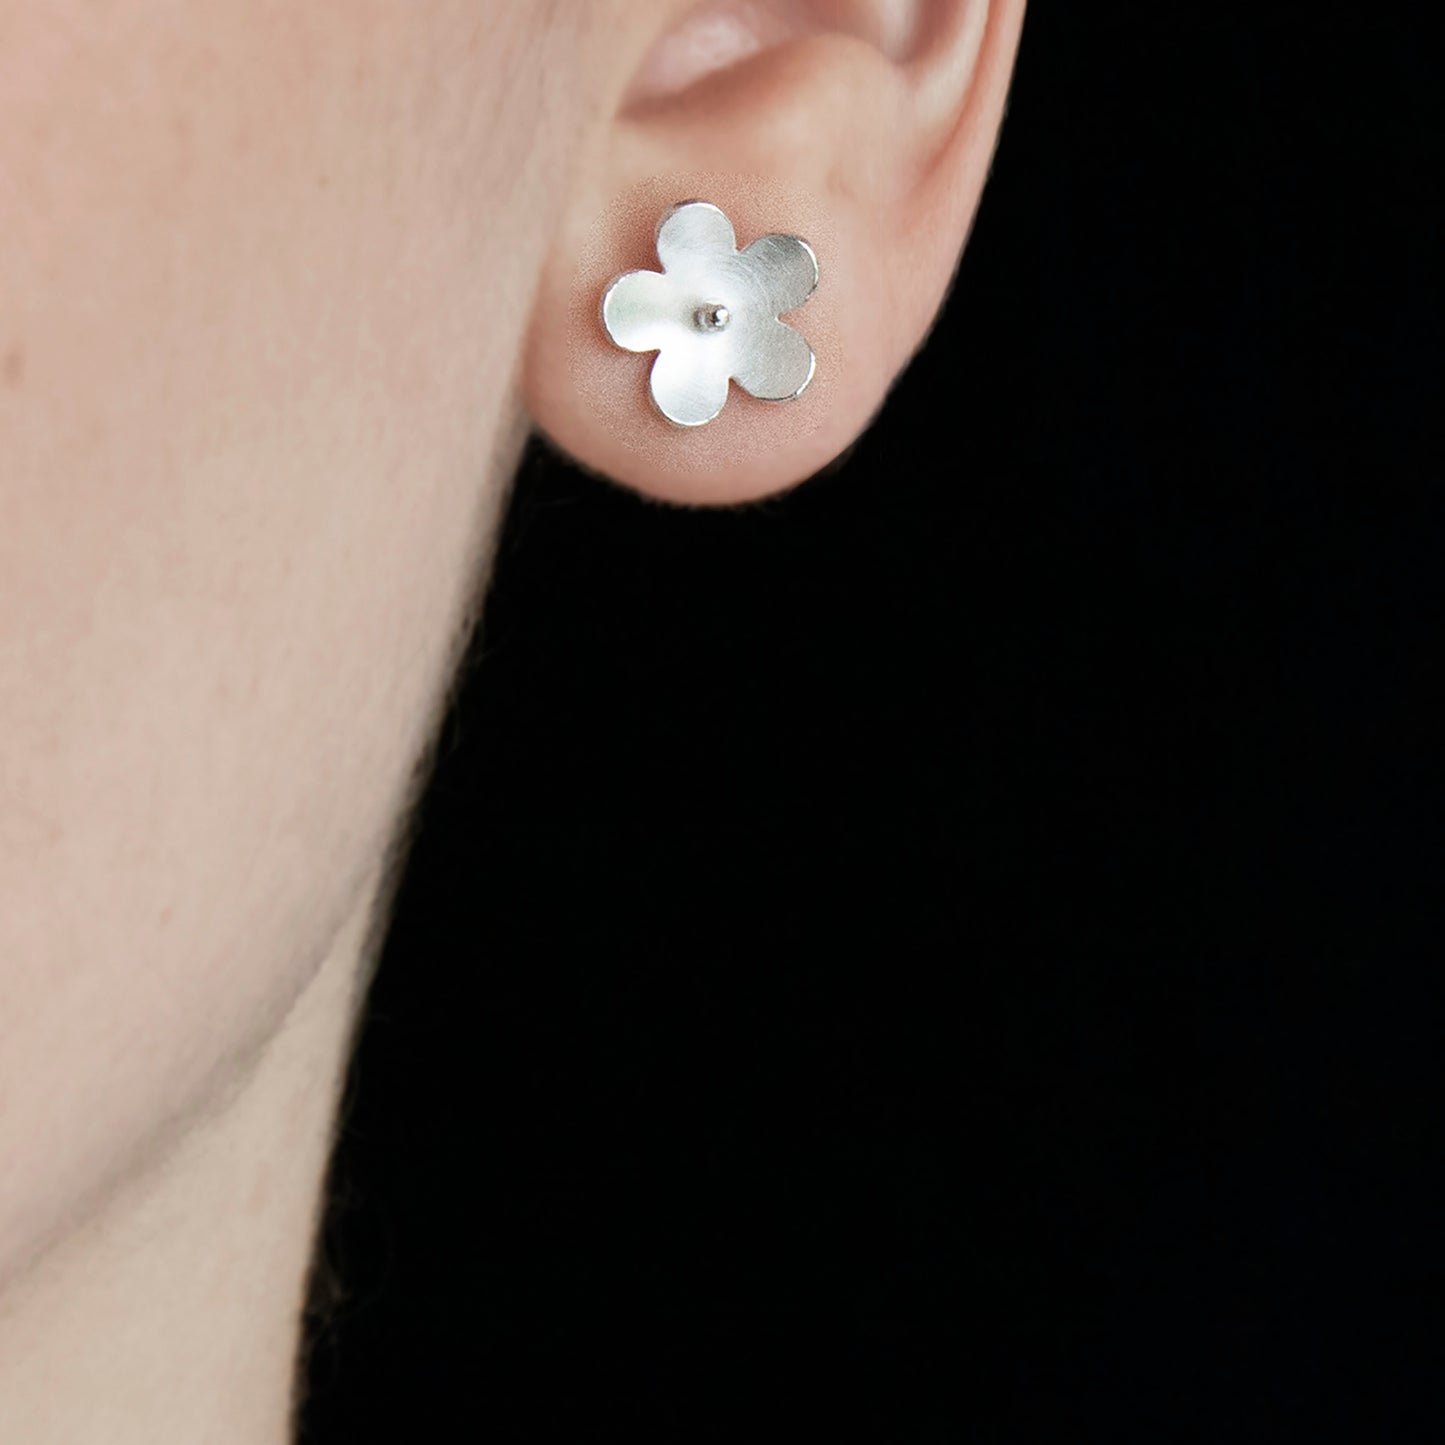 Silver blossom Flower Stud Earrings